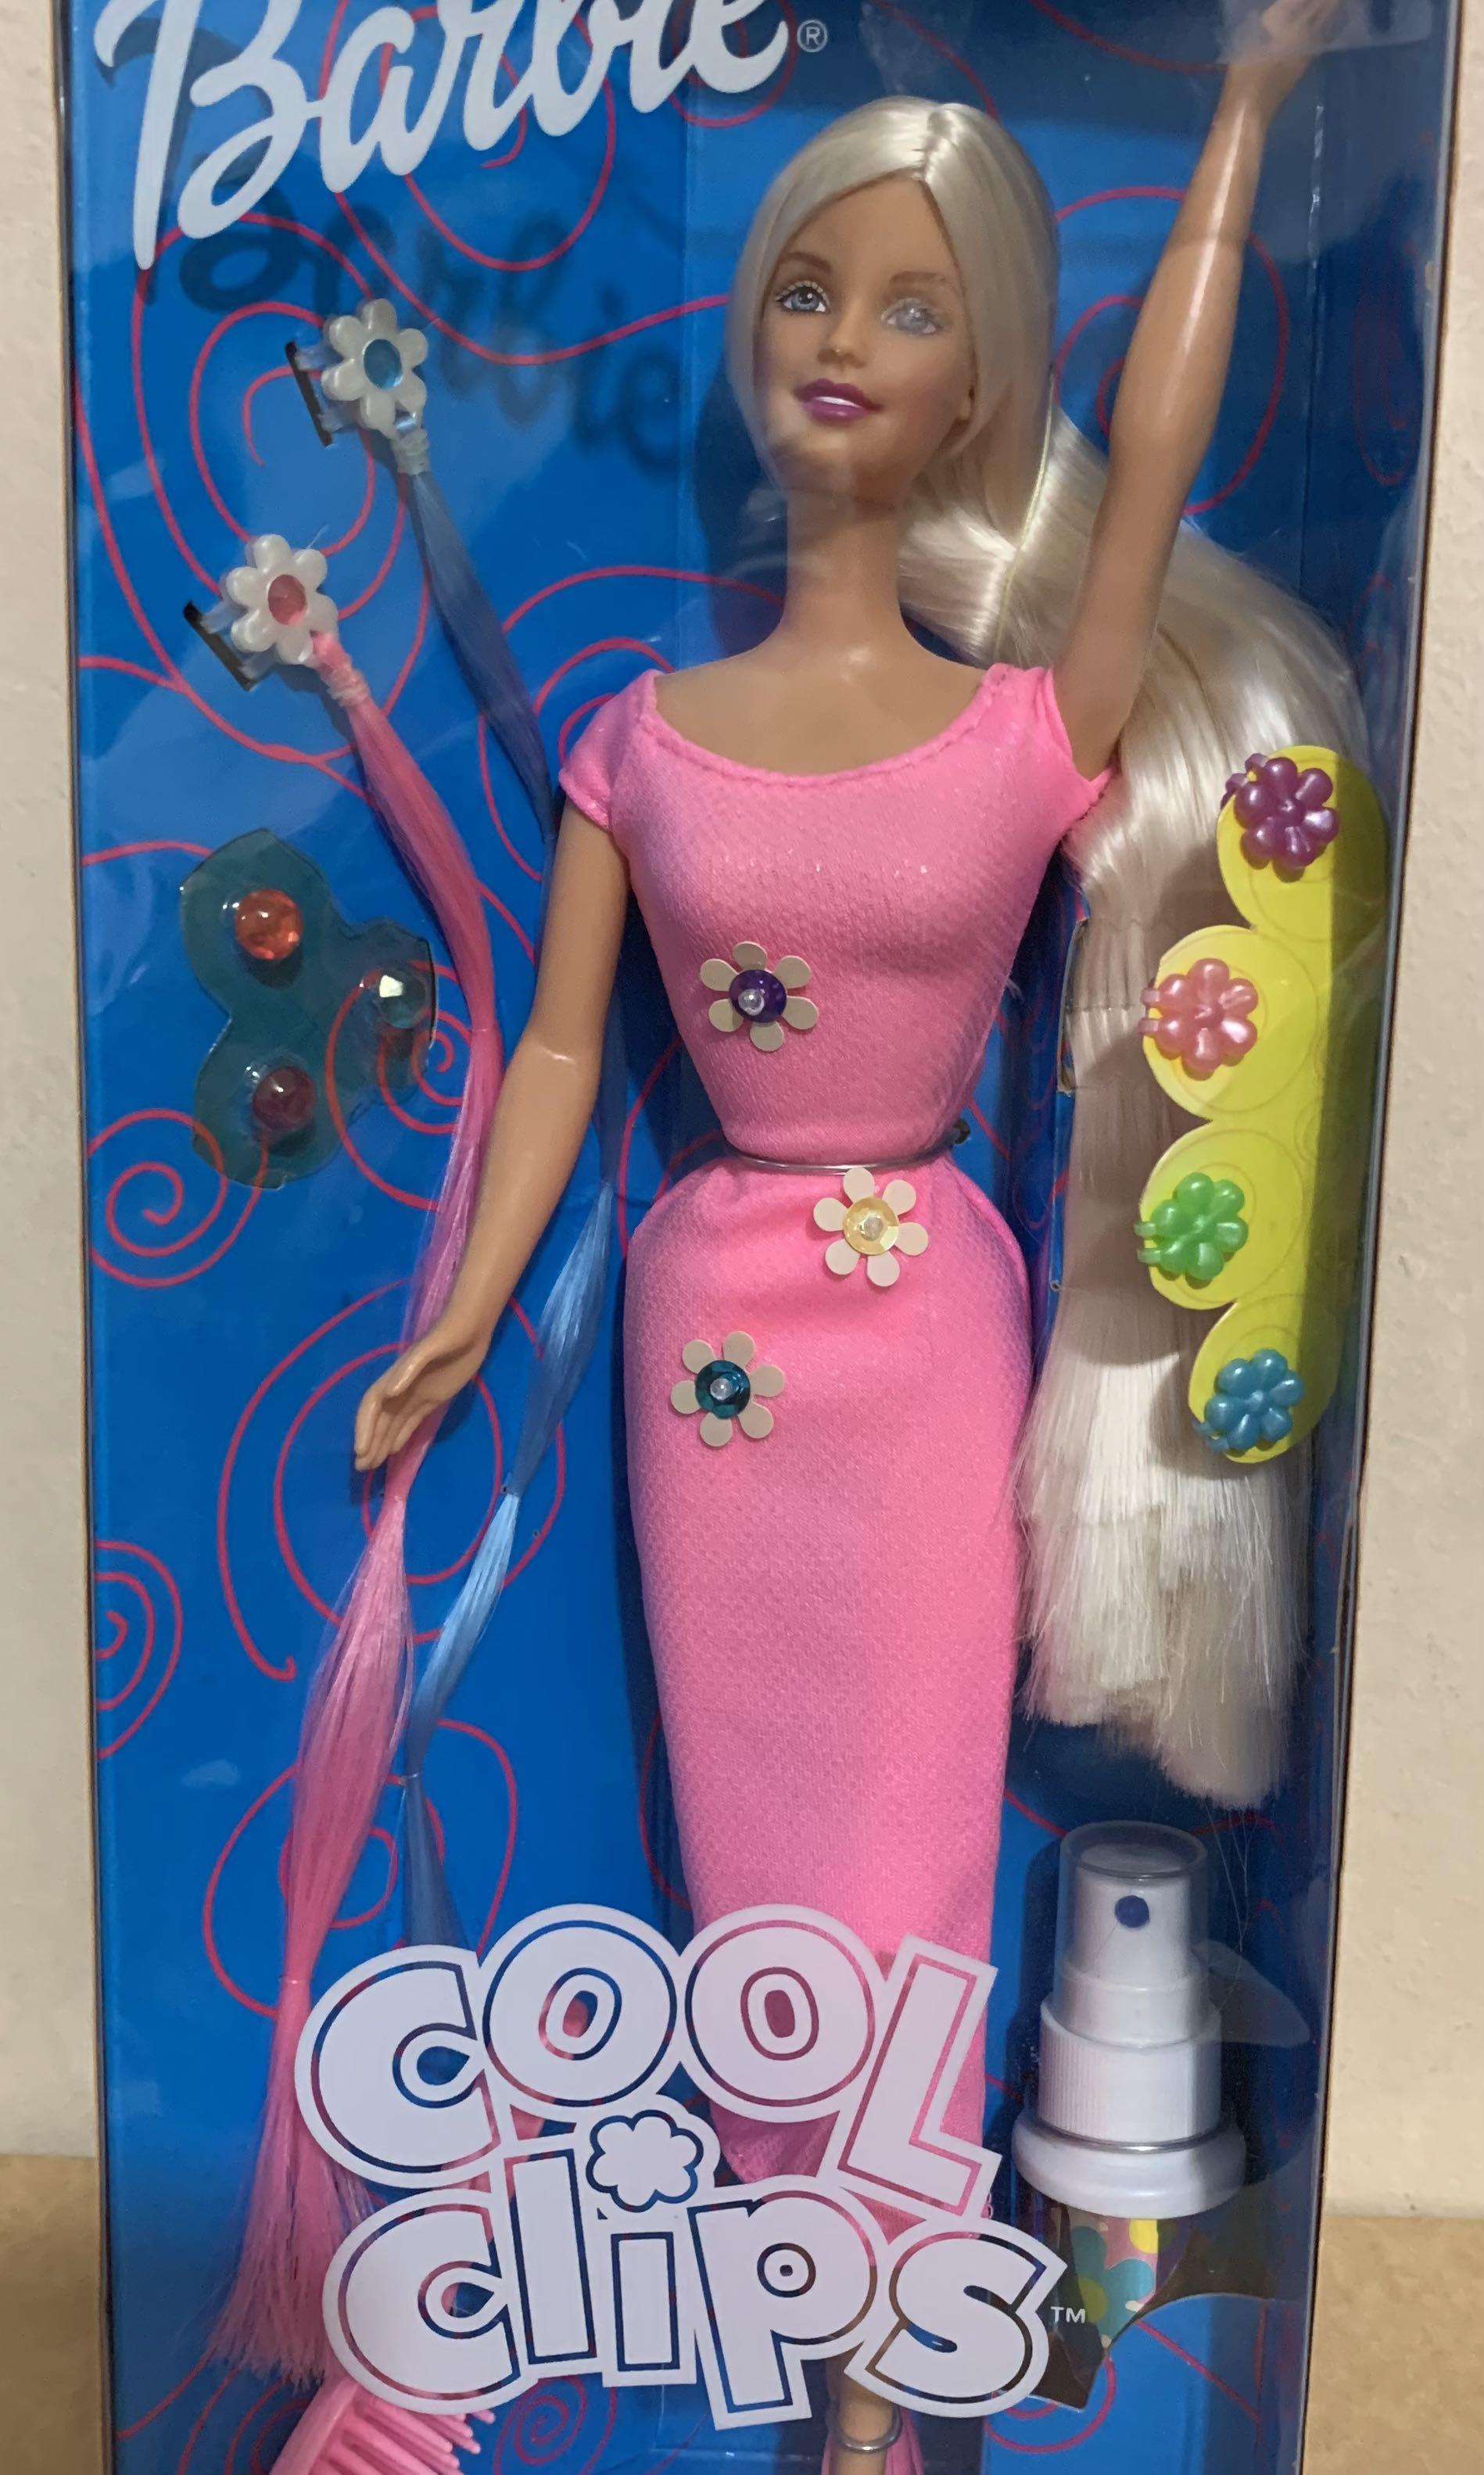 uitvinding zeewier Redding 1999 Cool Clips Barbie, Hobbies & Toys, Toys & Games on Carousell